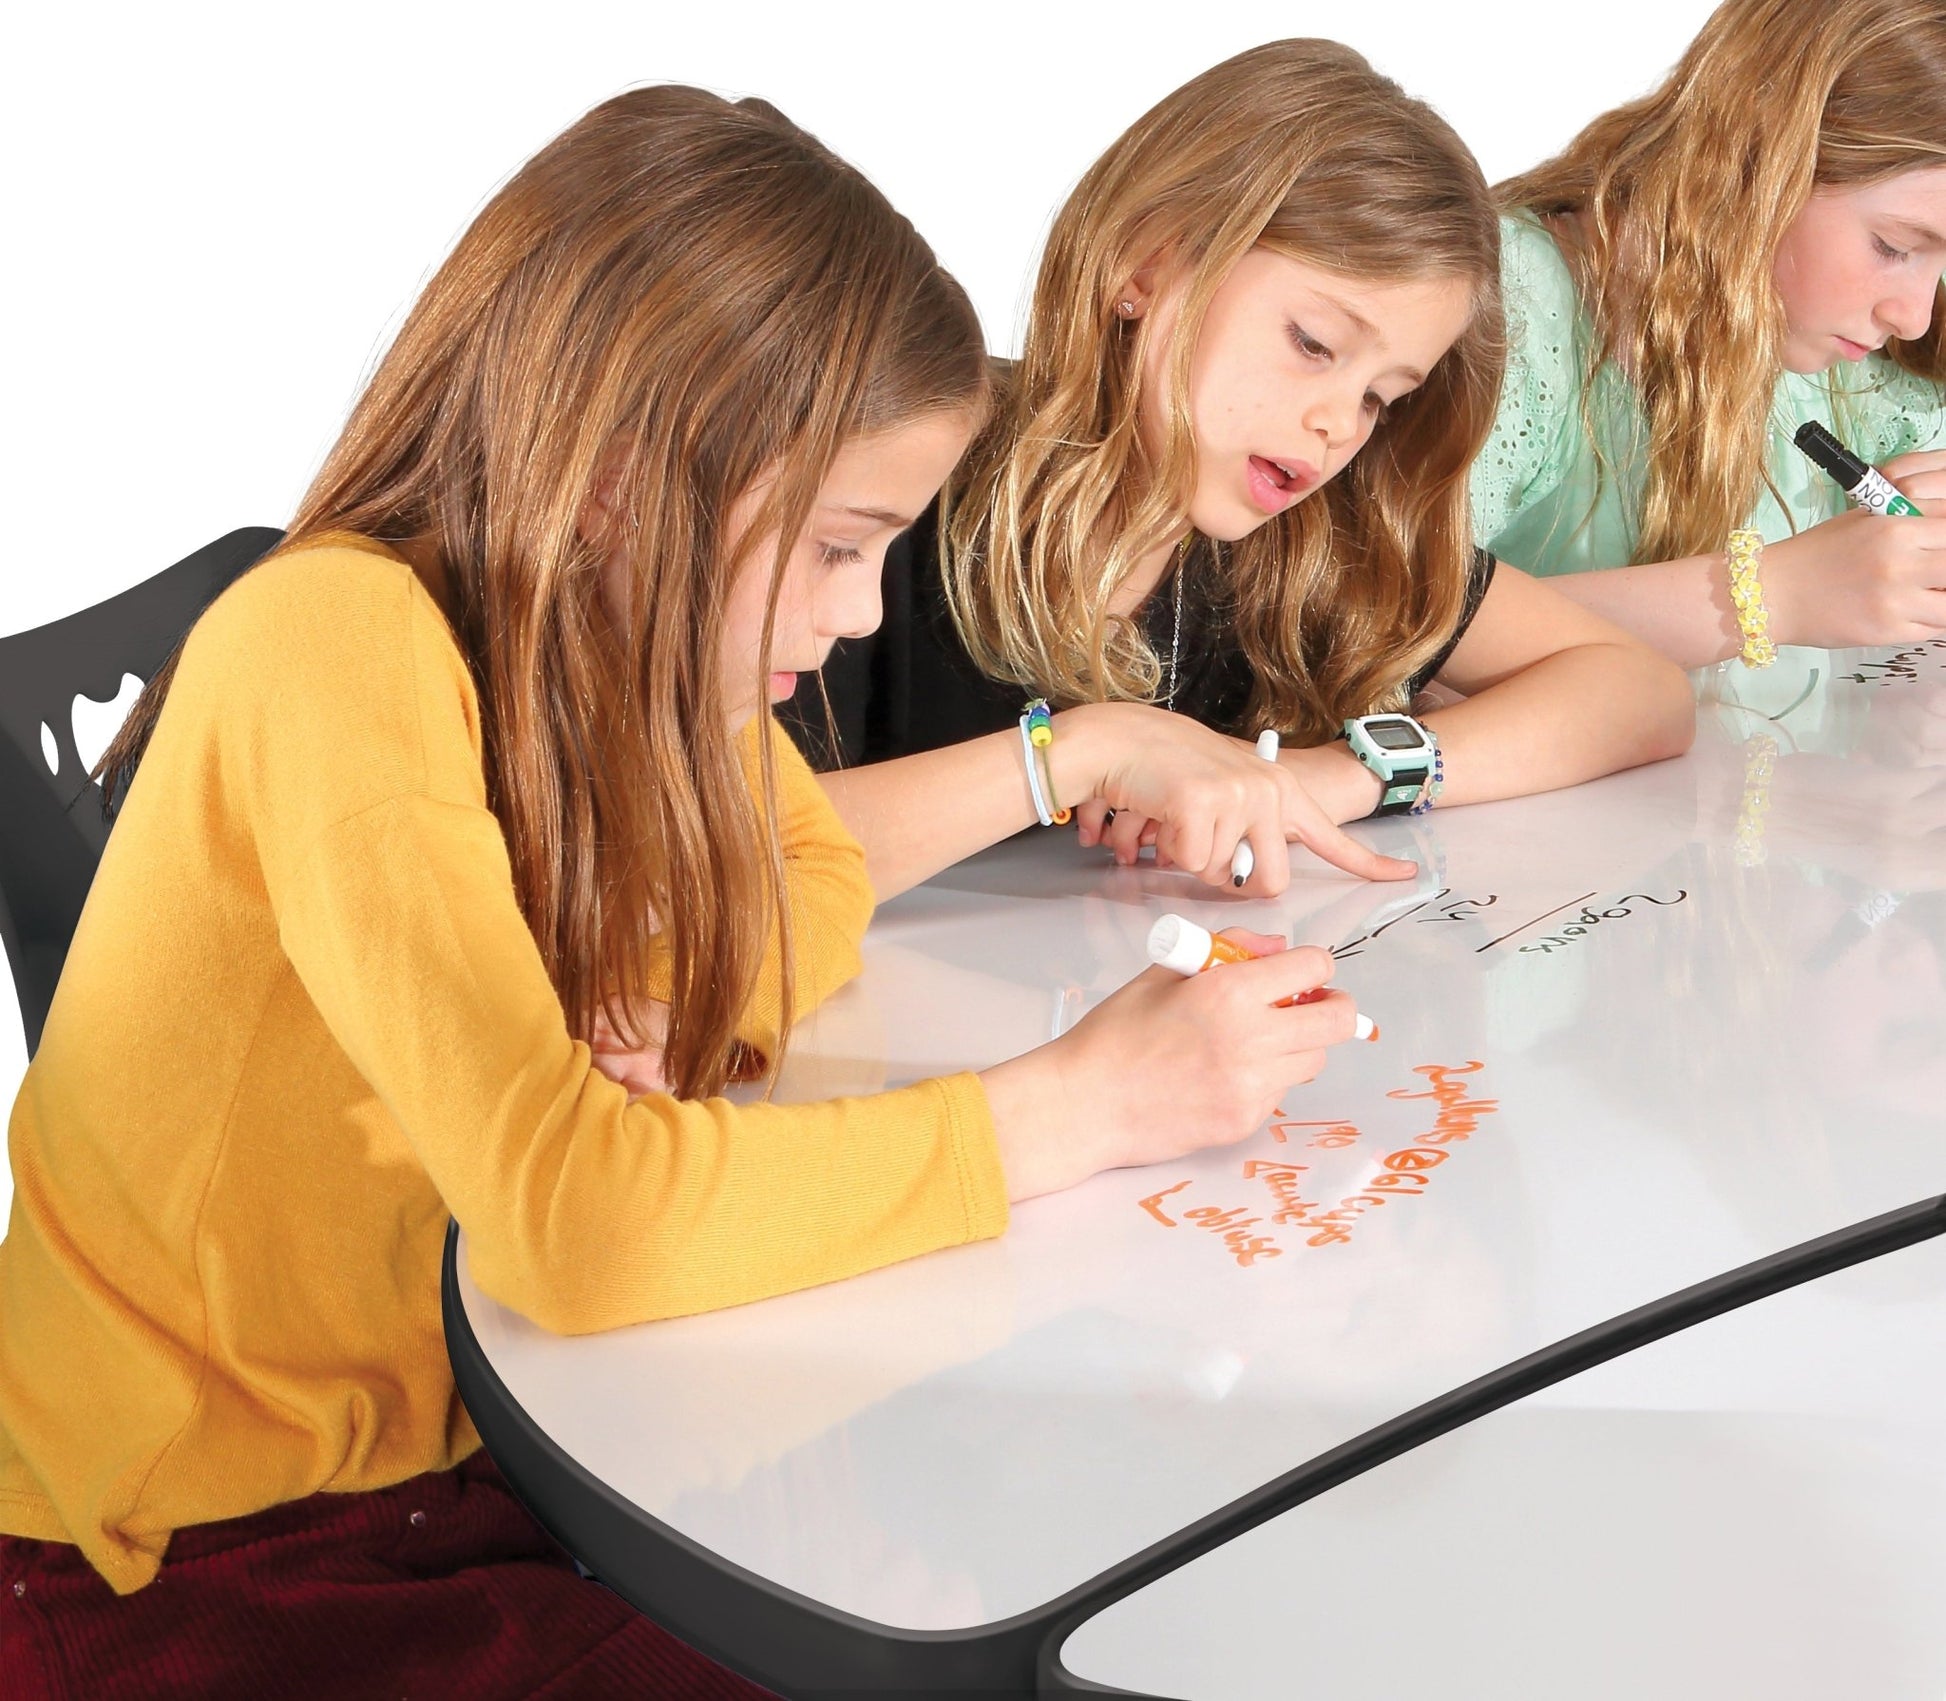 Hierarchy Creator Table + Porcelain Top – Wavy Rectangle - SchoolOutlet